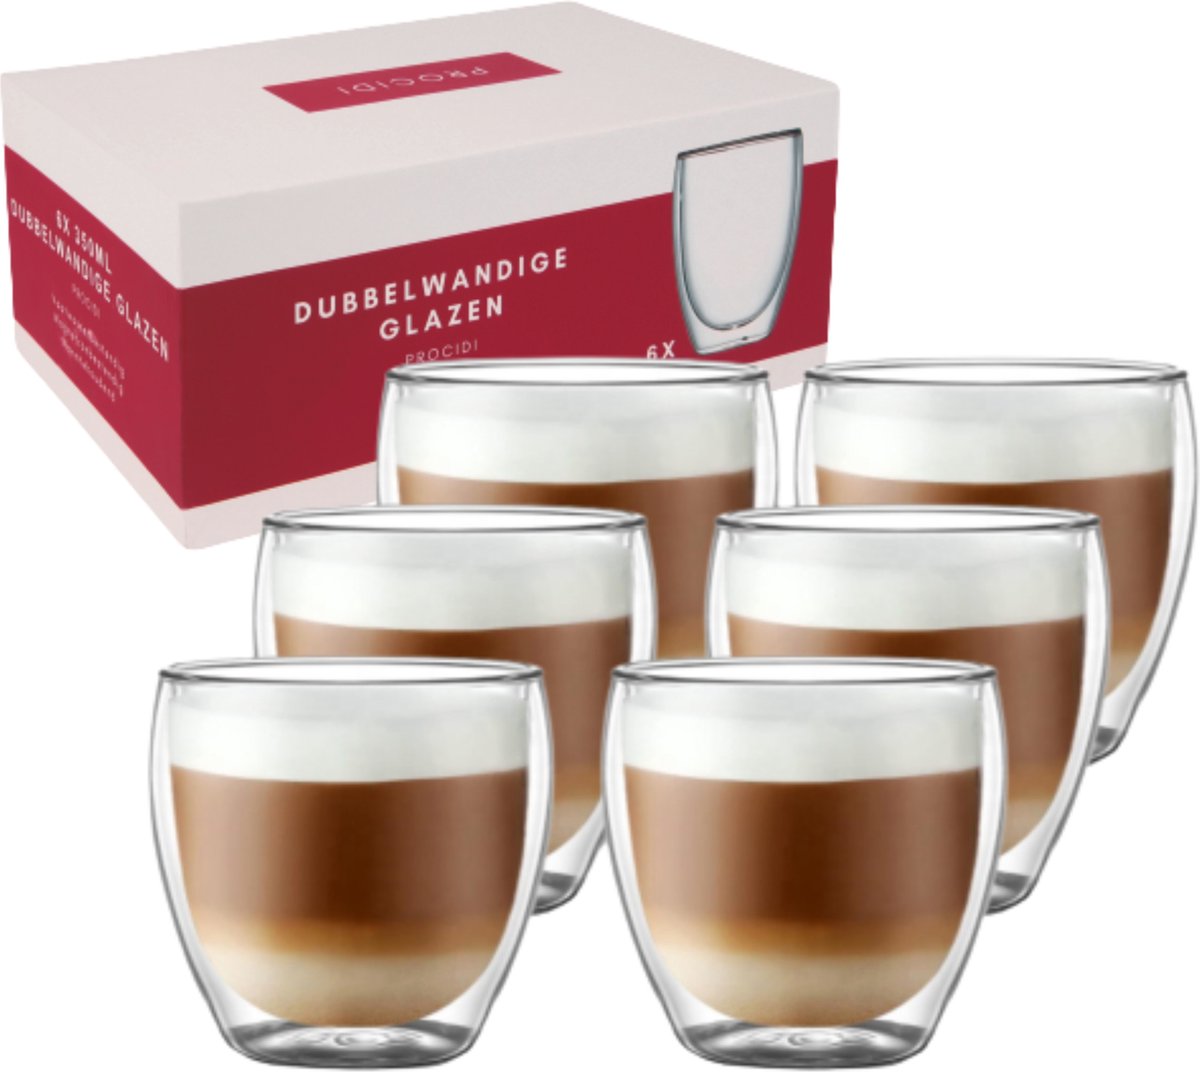 Procidi® Dubbelwandige Glazen - Theeglazen - 250 ml - 6 stuks - Latte Macchiato / Cappucino - Koffieglazen Dubbelwandig - Koffietassen - Vaatwasserbestendig